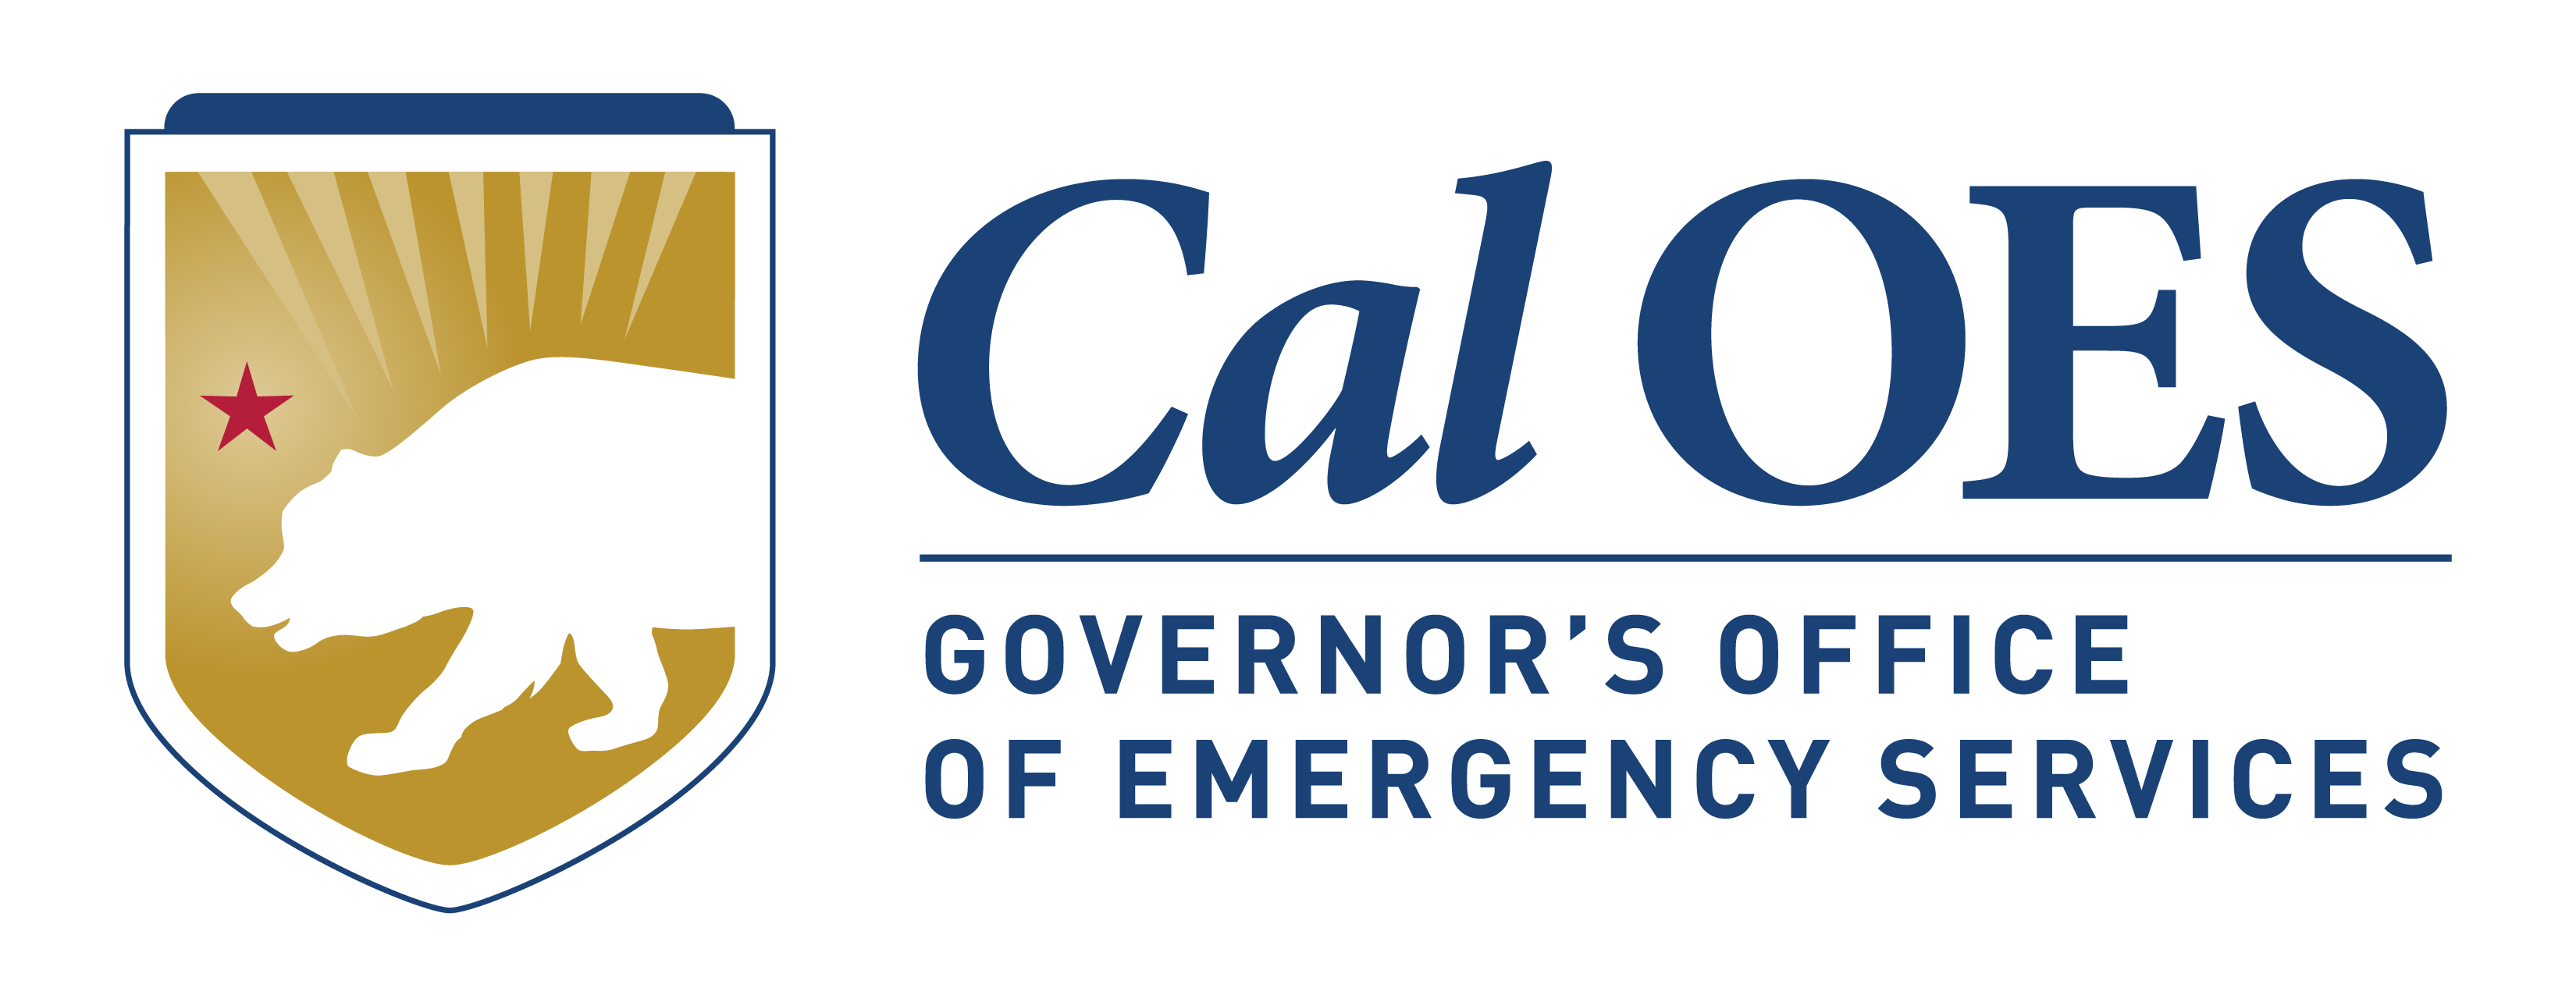 Cal OES Logo